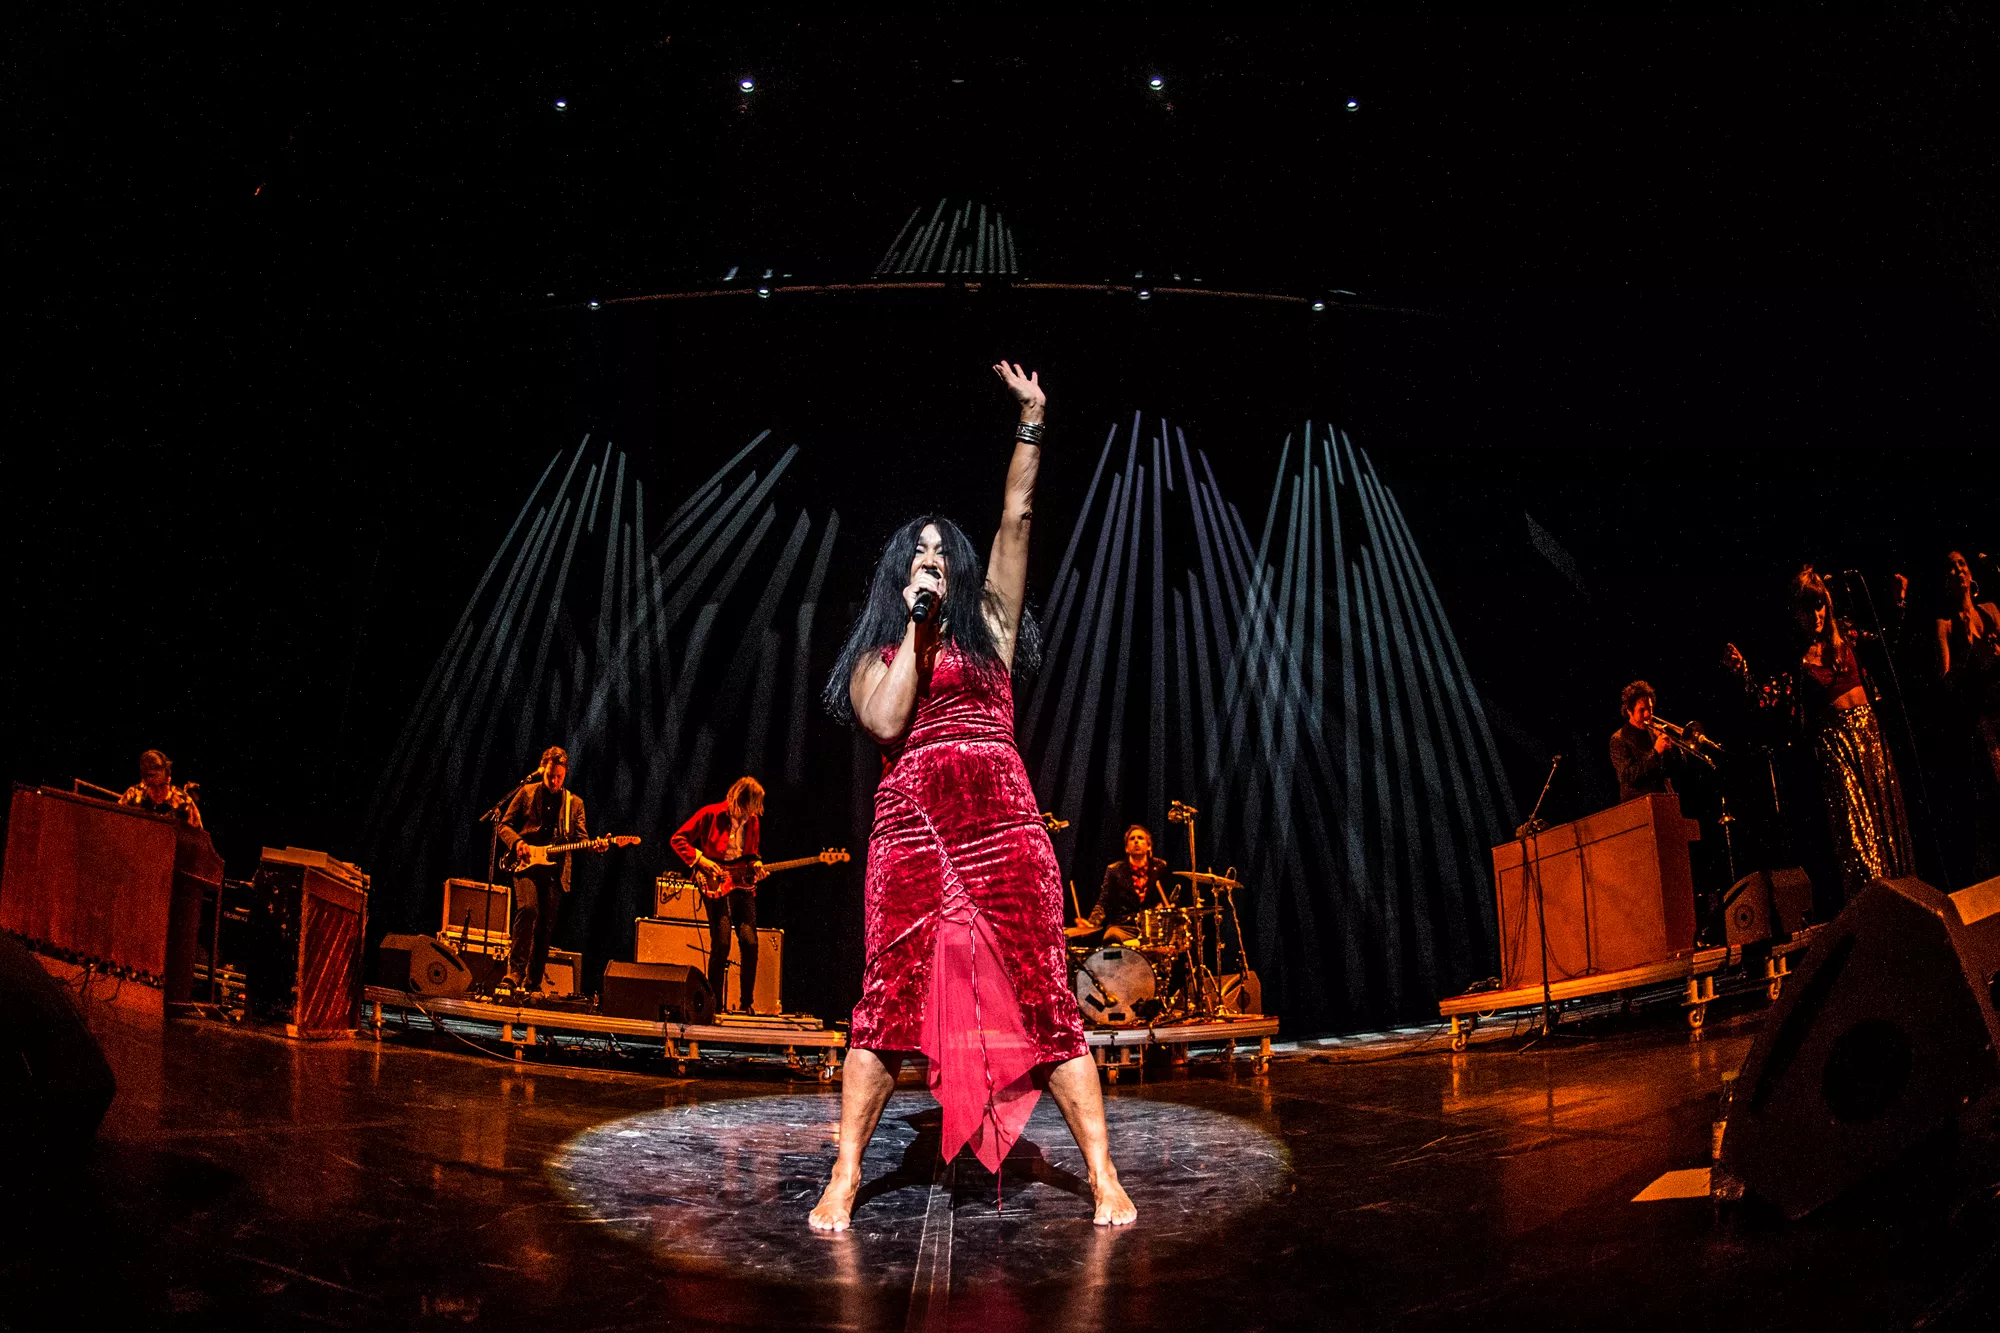 The Savage Rose fejrer 50 års-jubilæum med skandinavisk turné